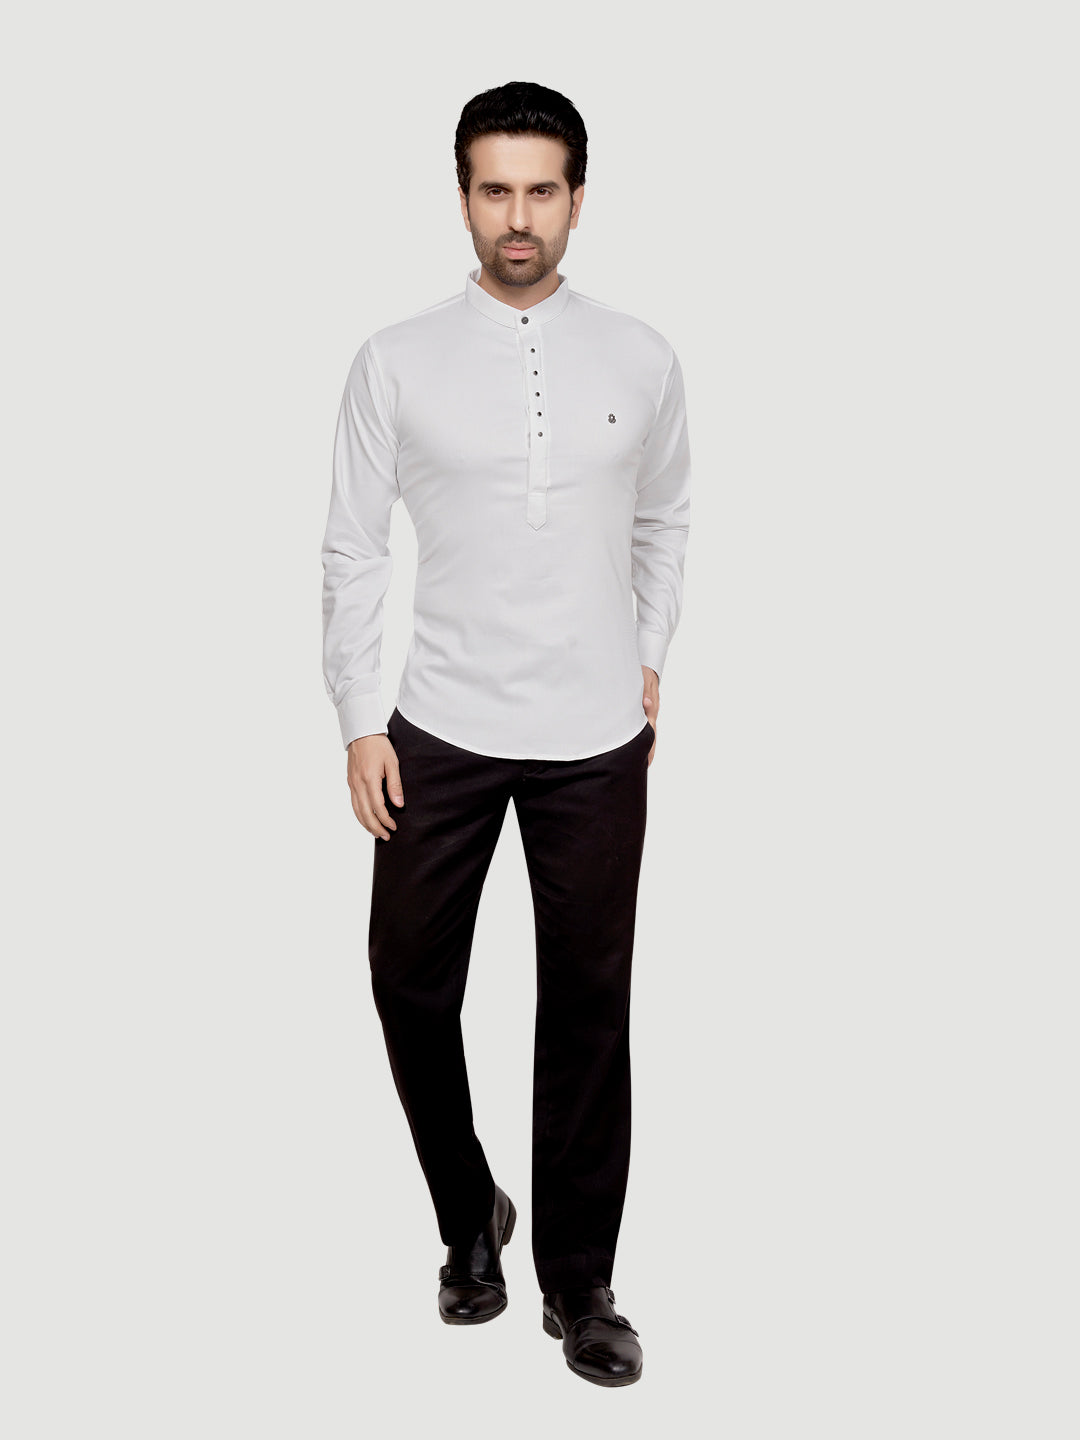 Black and White Men's Designer Short Kurta with Metal Buttons Bright White